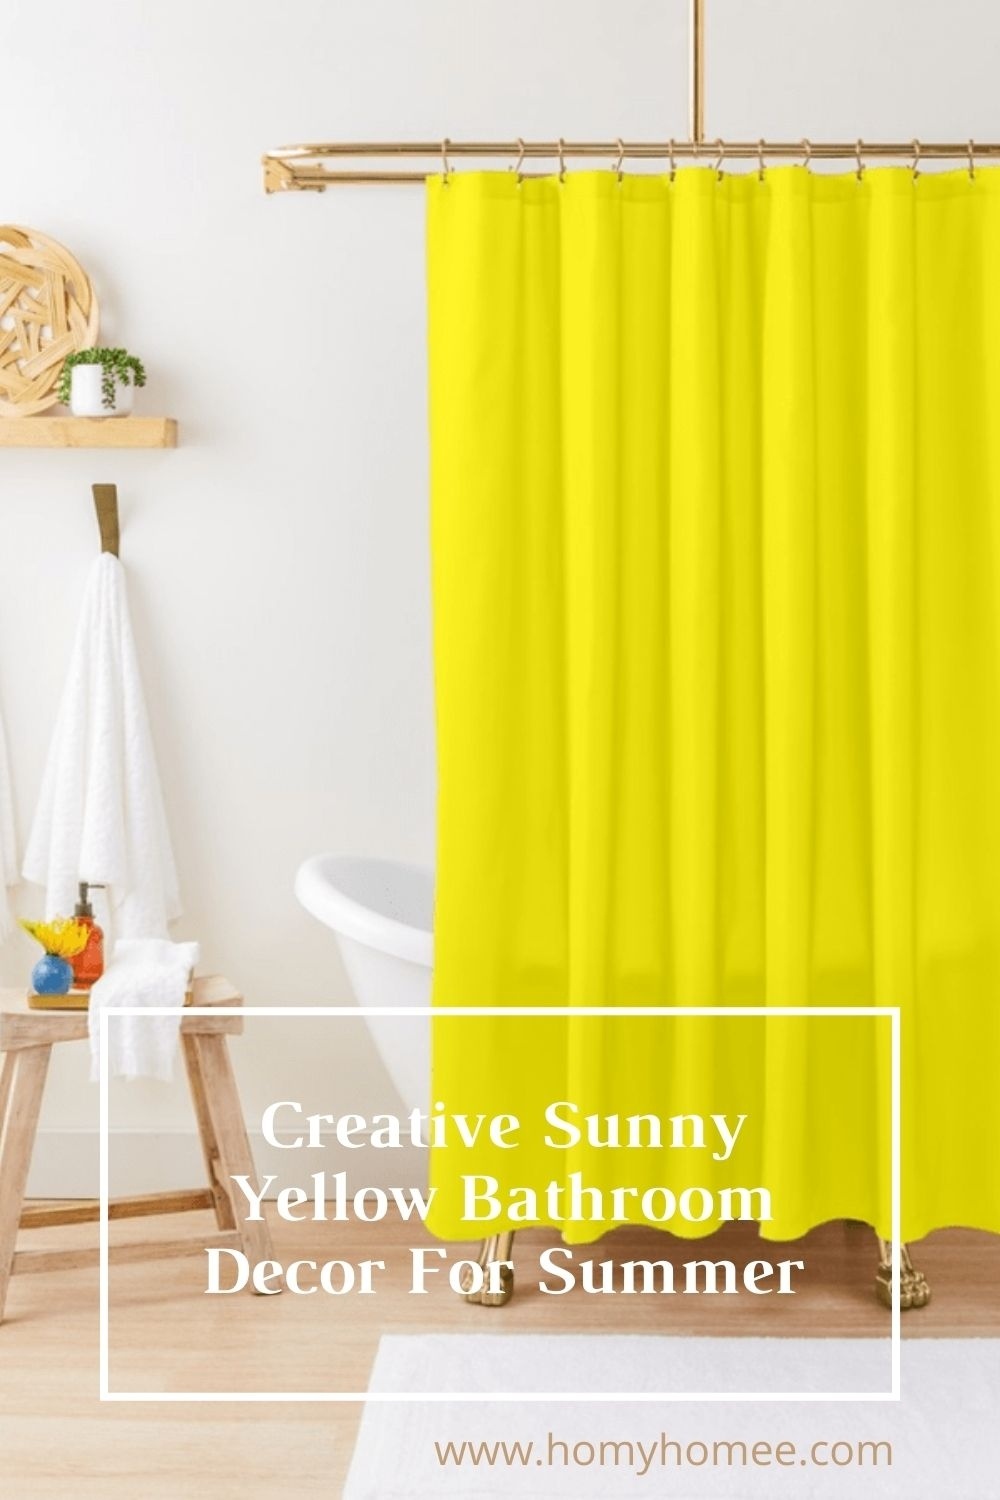 Creative Sunny Yellow Bathroom Decor For Summer